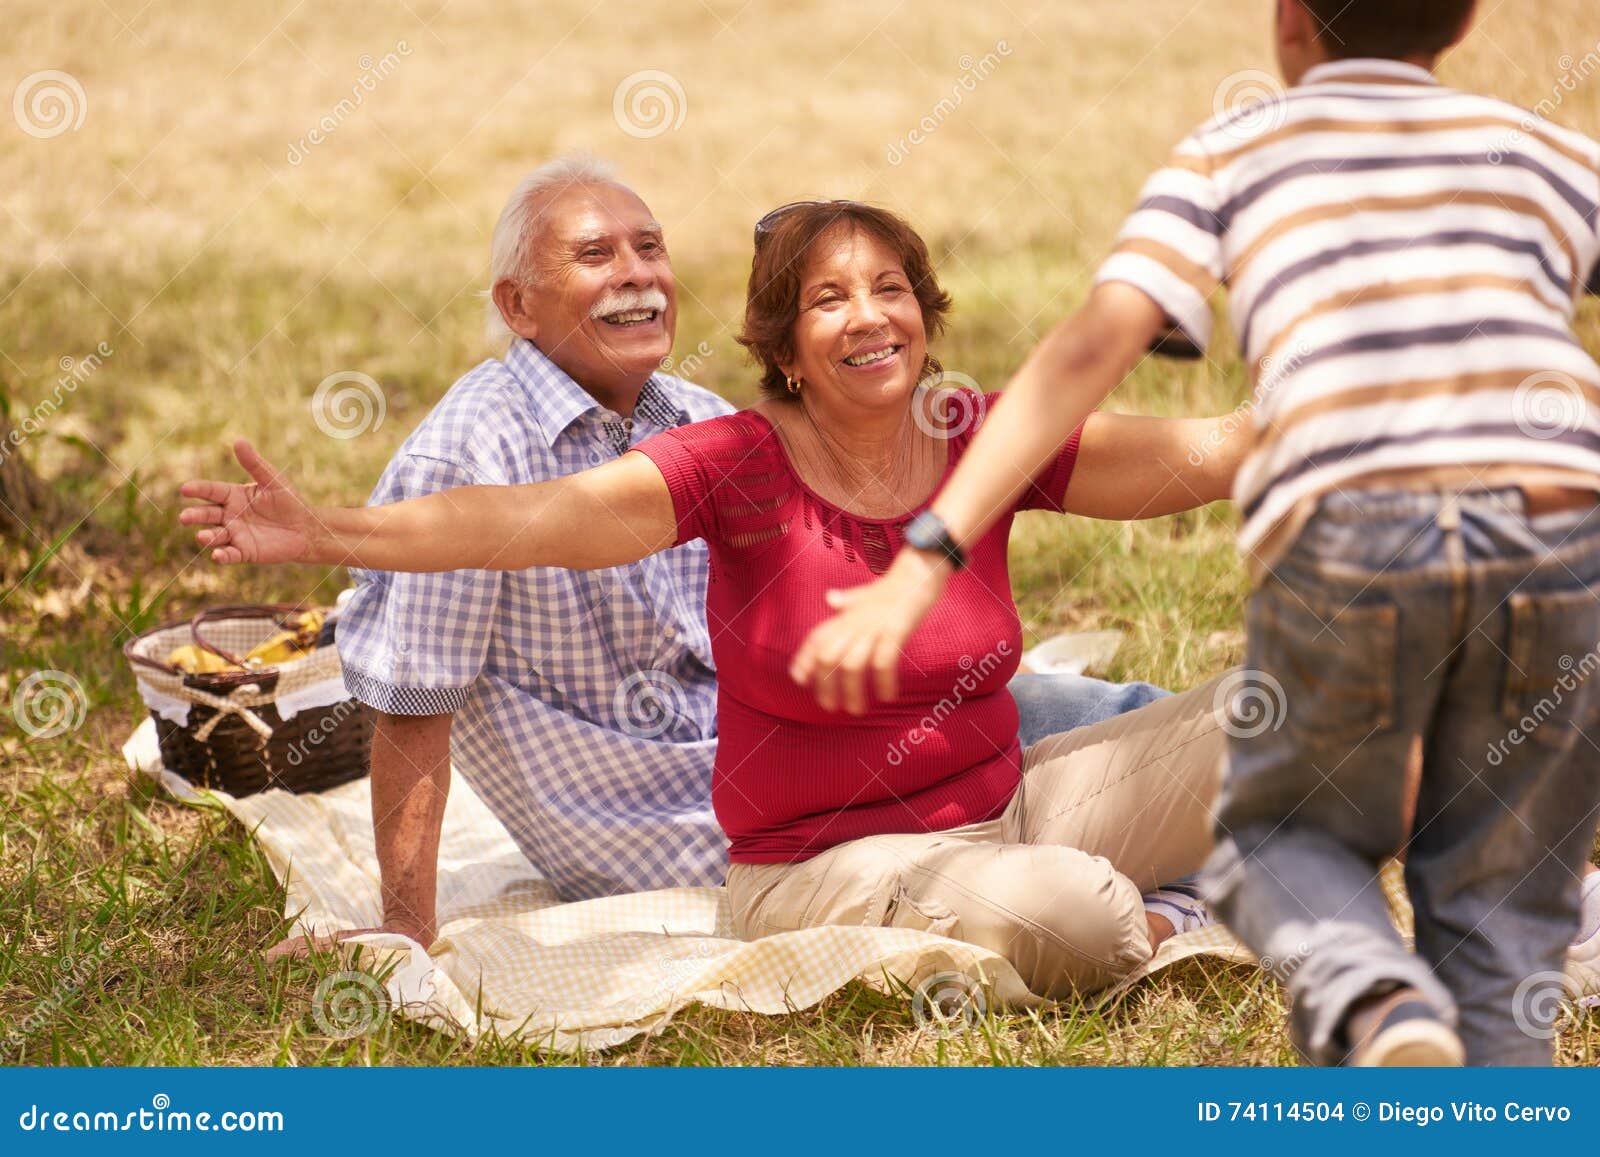 grandparents senior couple hugging young boy at picnic